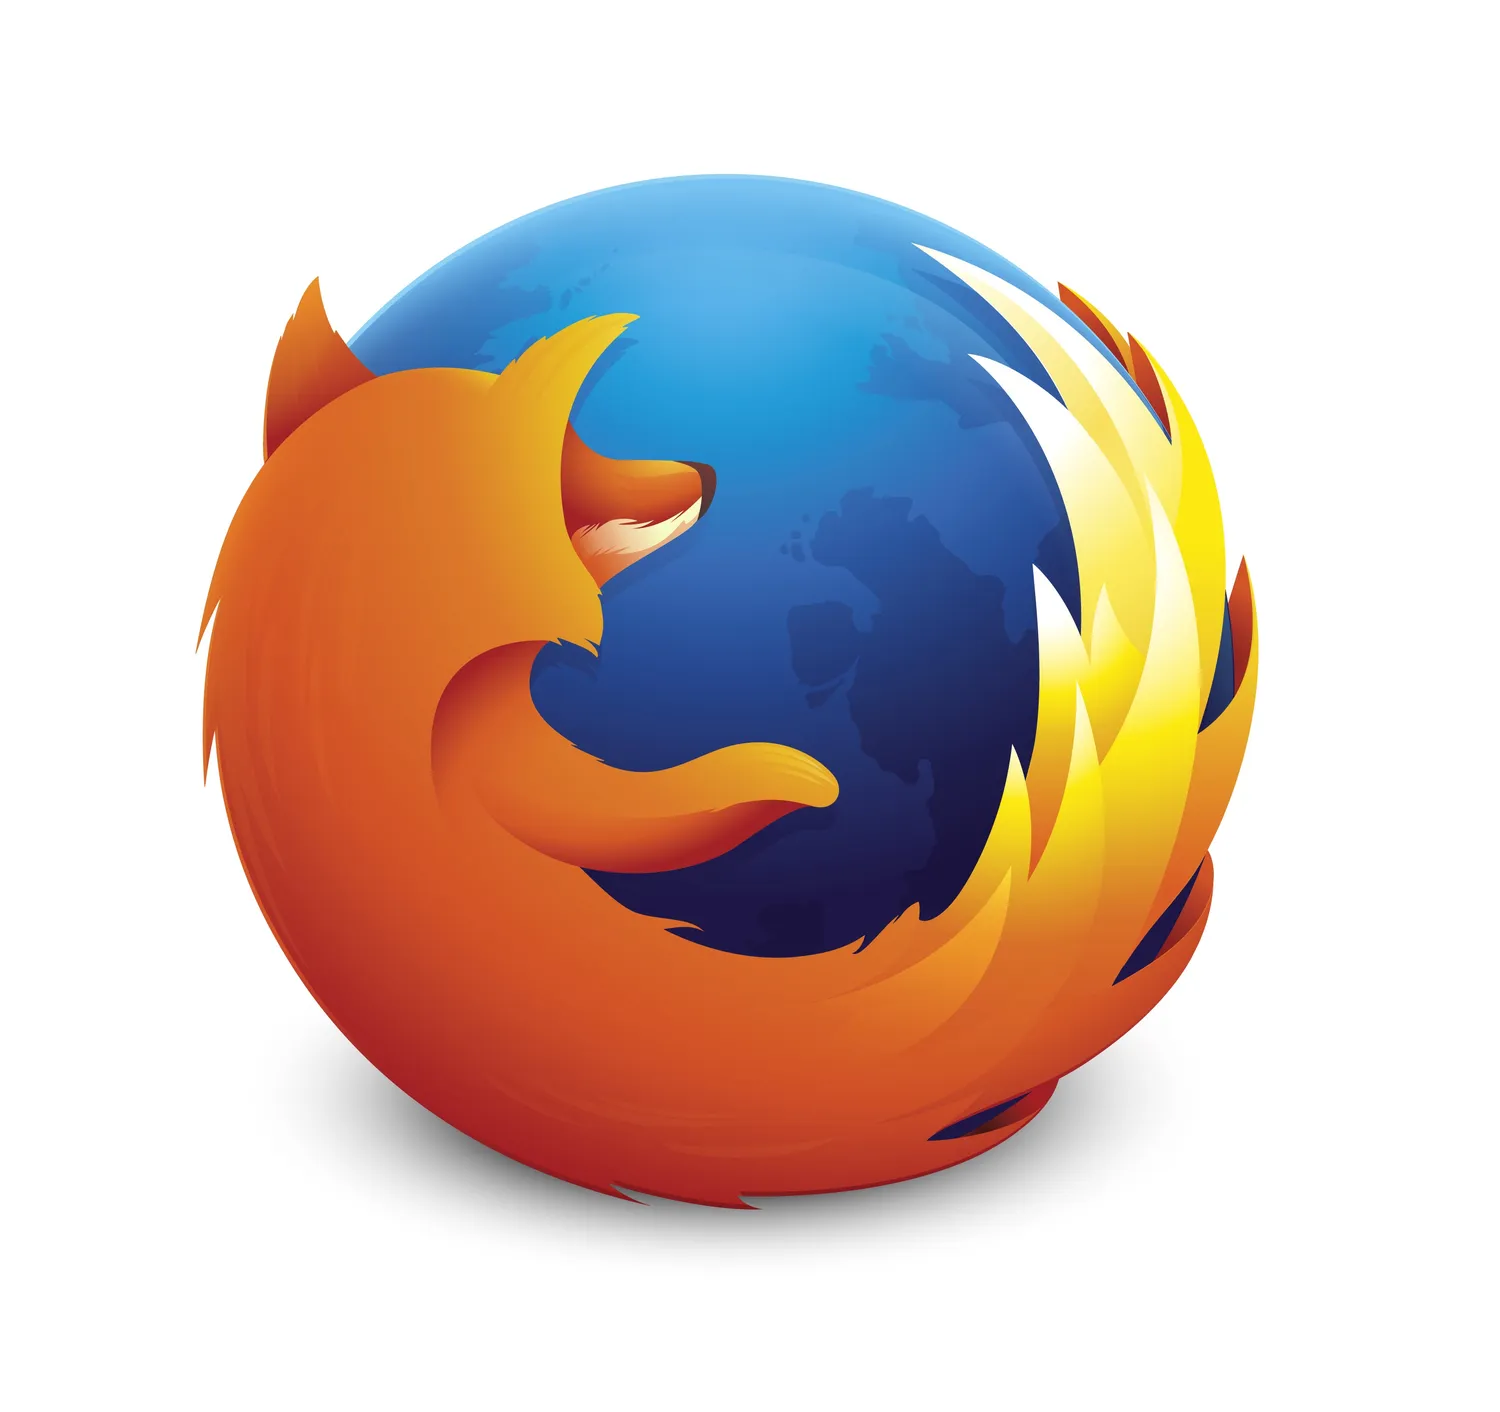 Вышла новая версия браузера Firefox